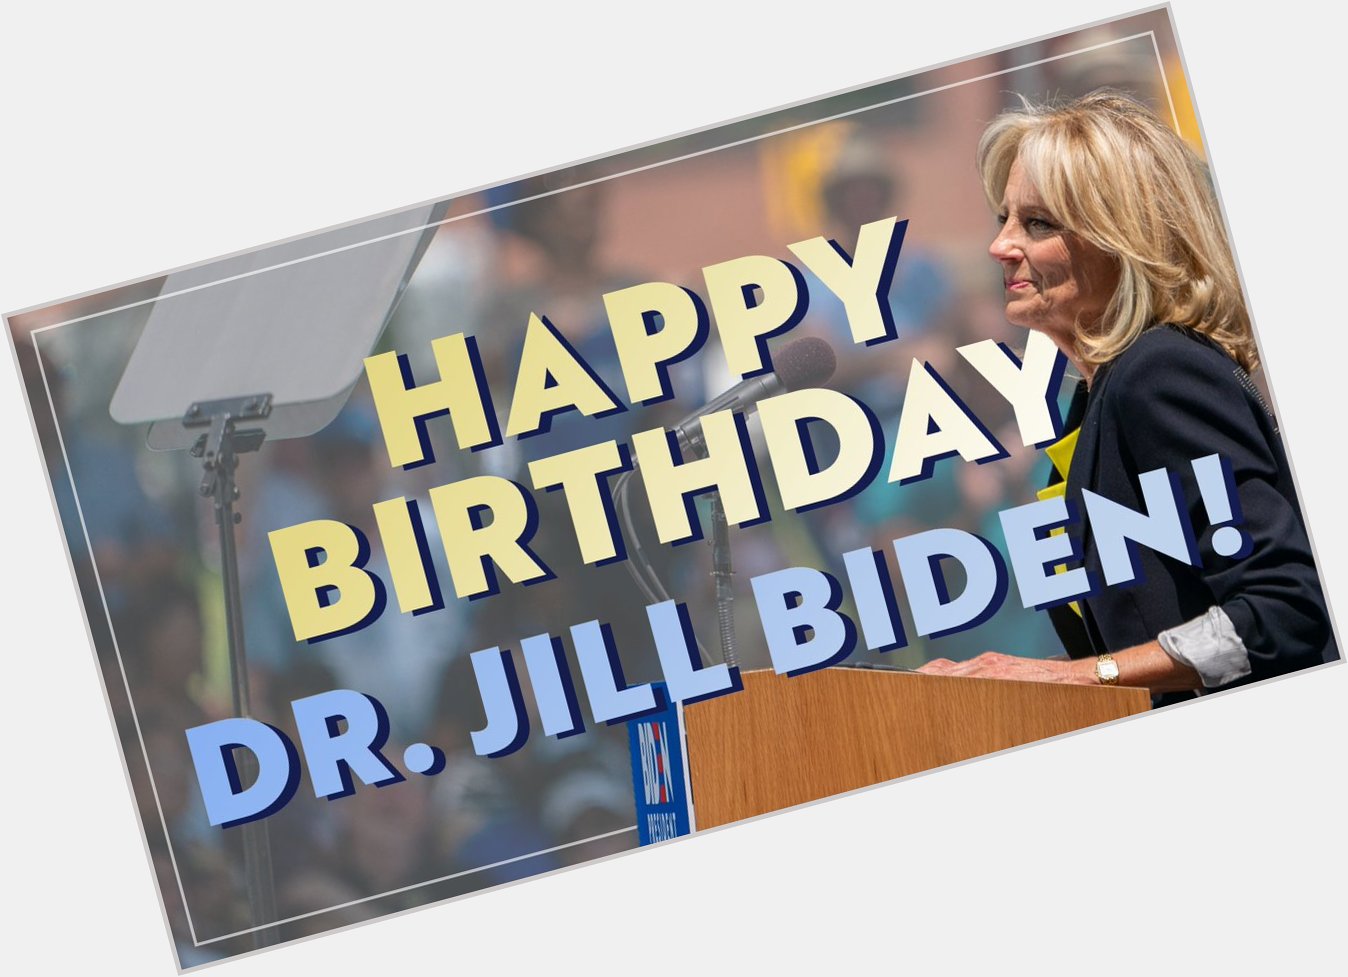 Wishing a very happy birthday to Dr. Jill Biden! 